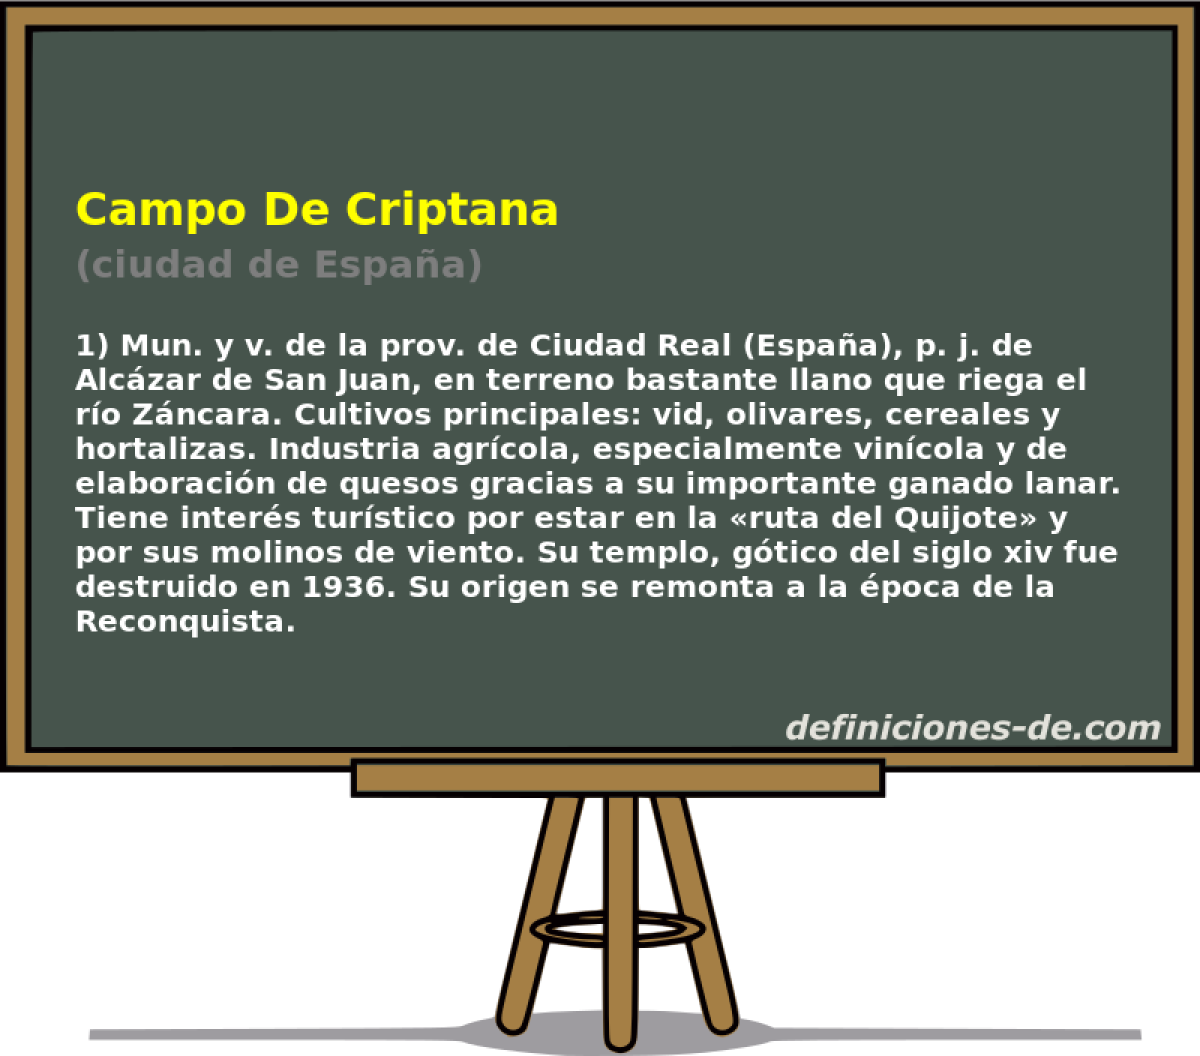 Campo De Criptana (ciudad de Espaa)